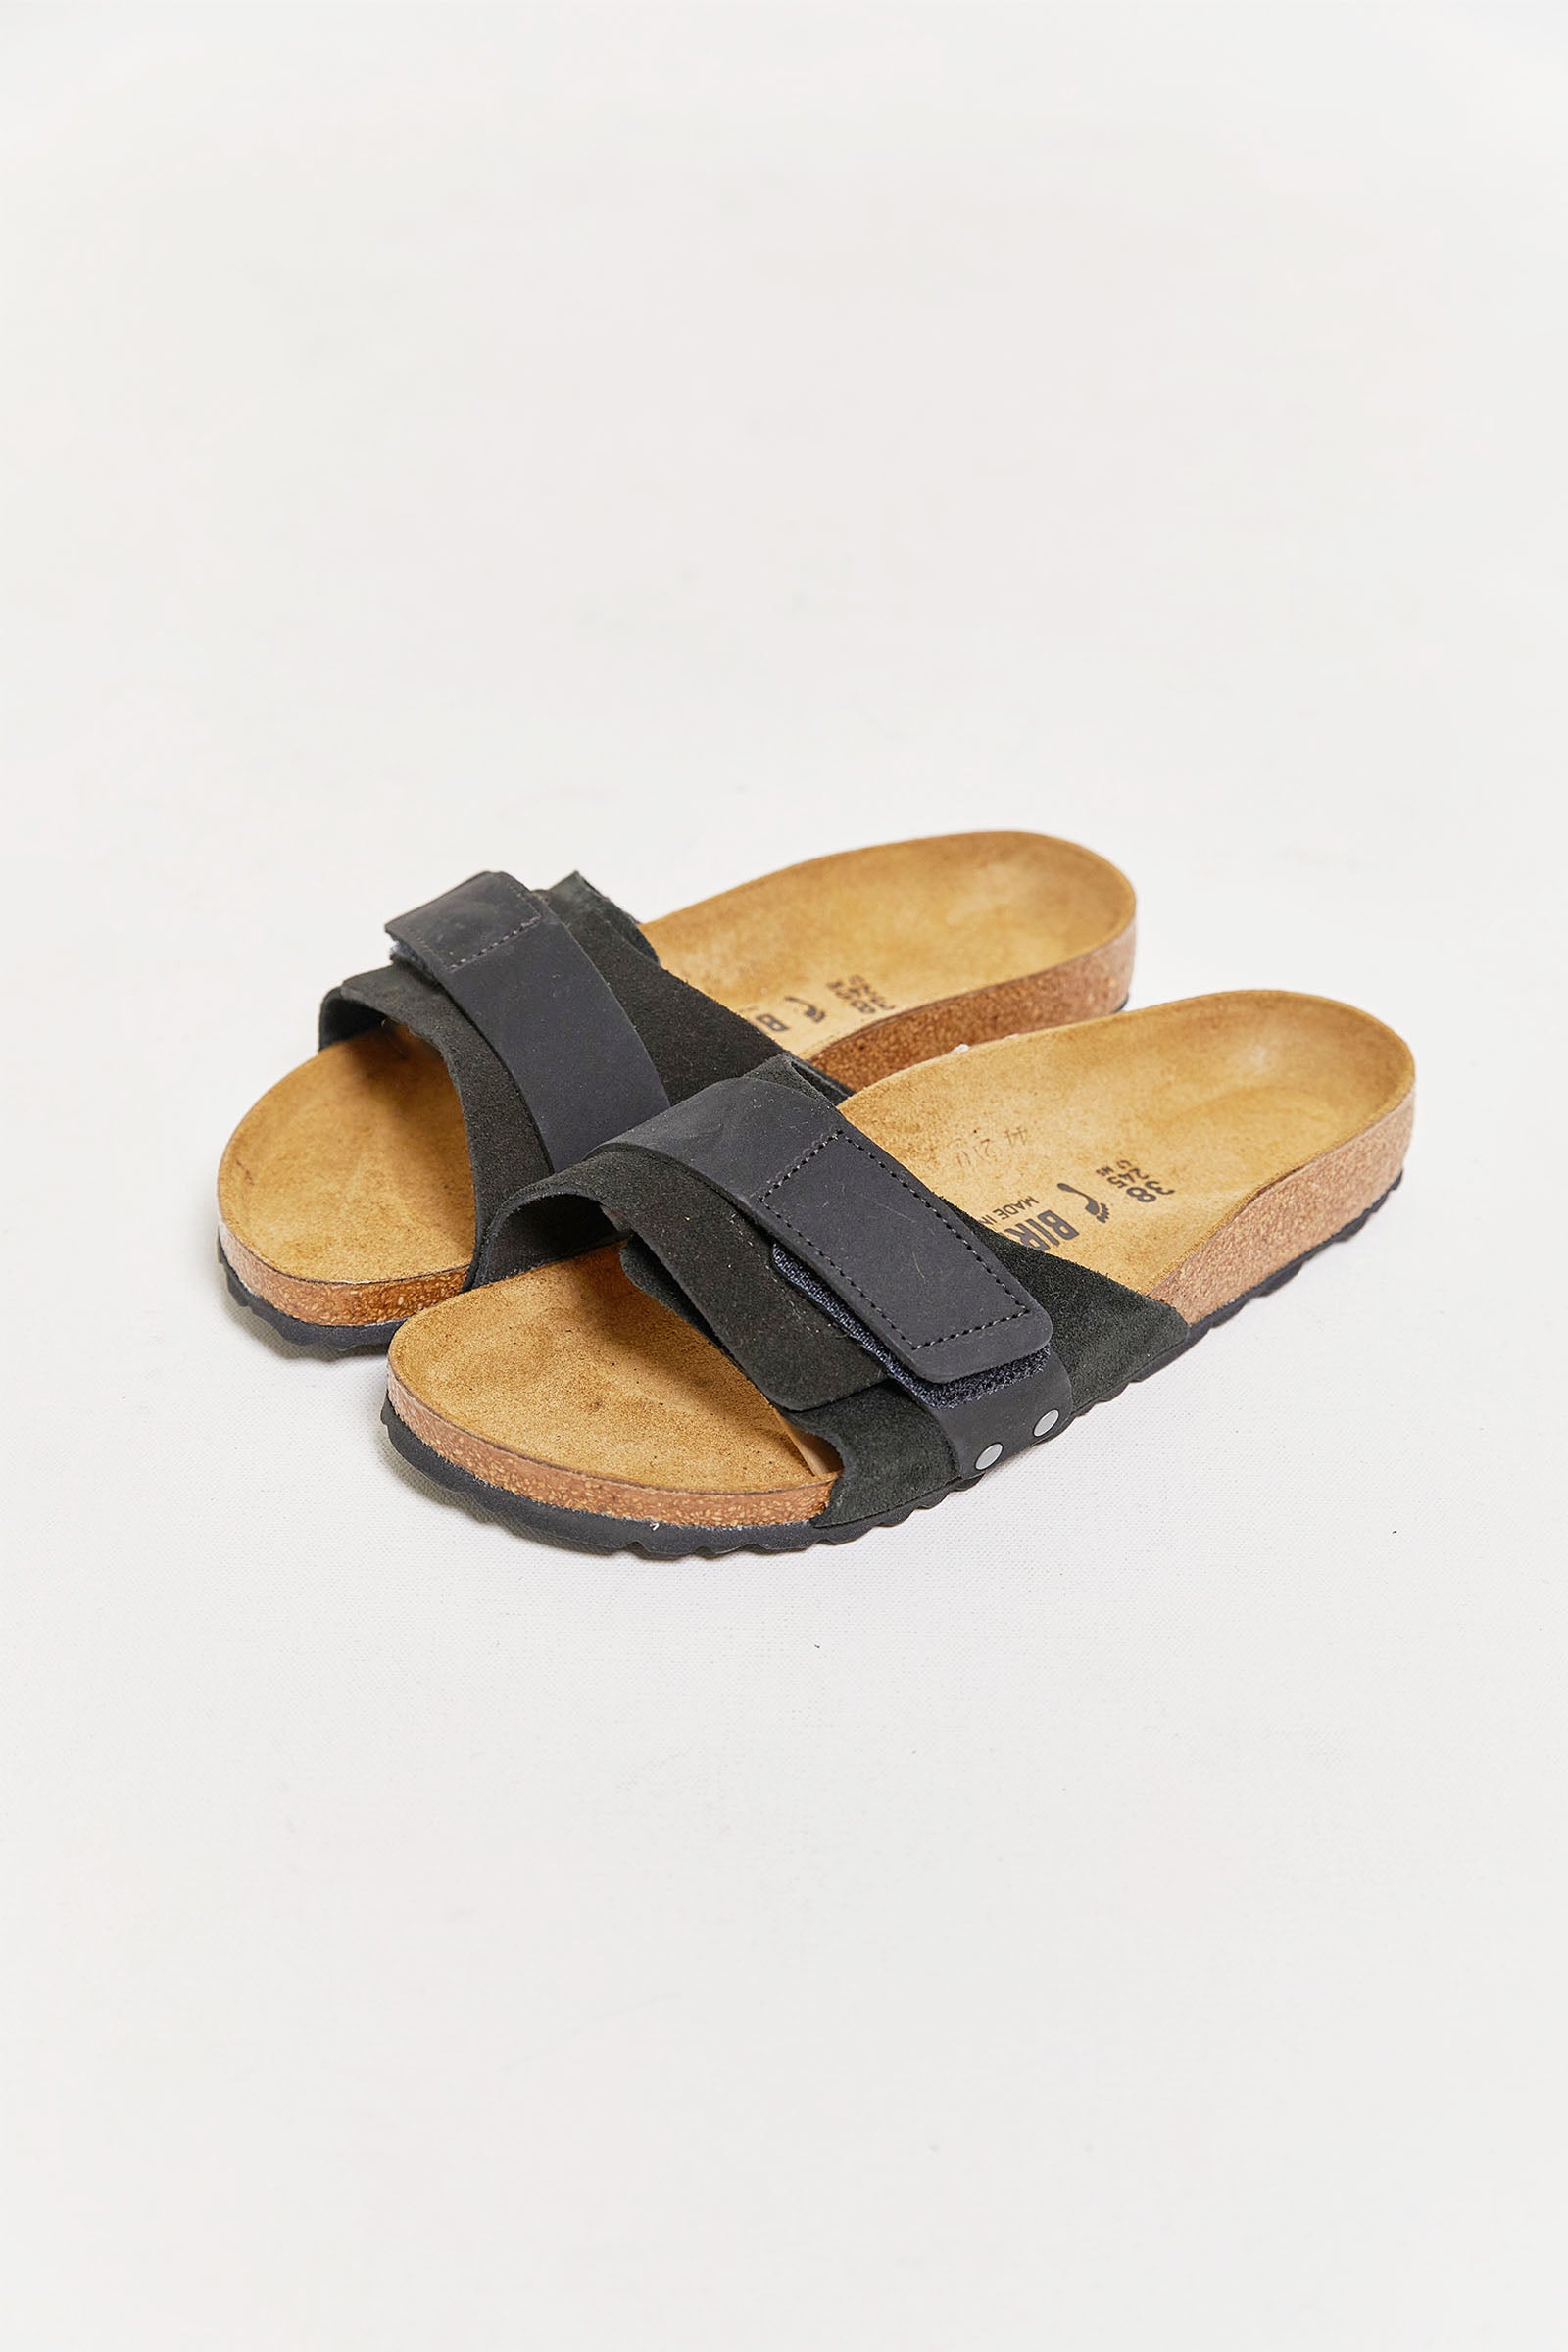 byfreer birkenstock oita black suede sandal.